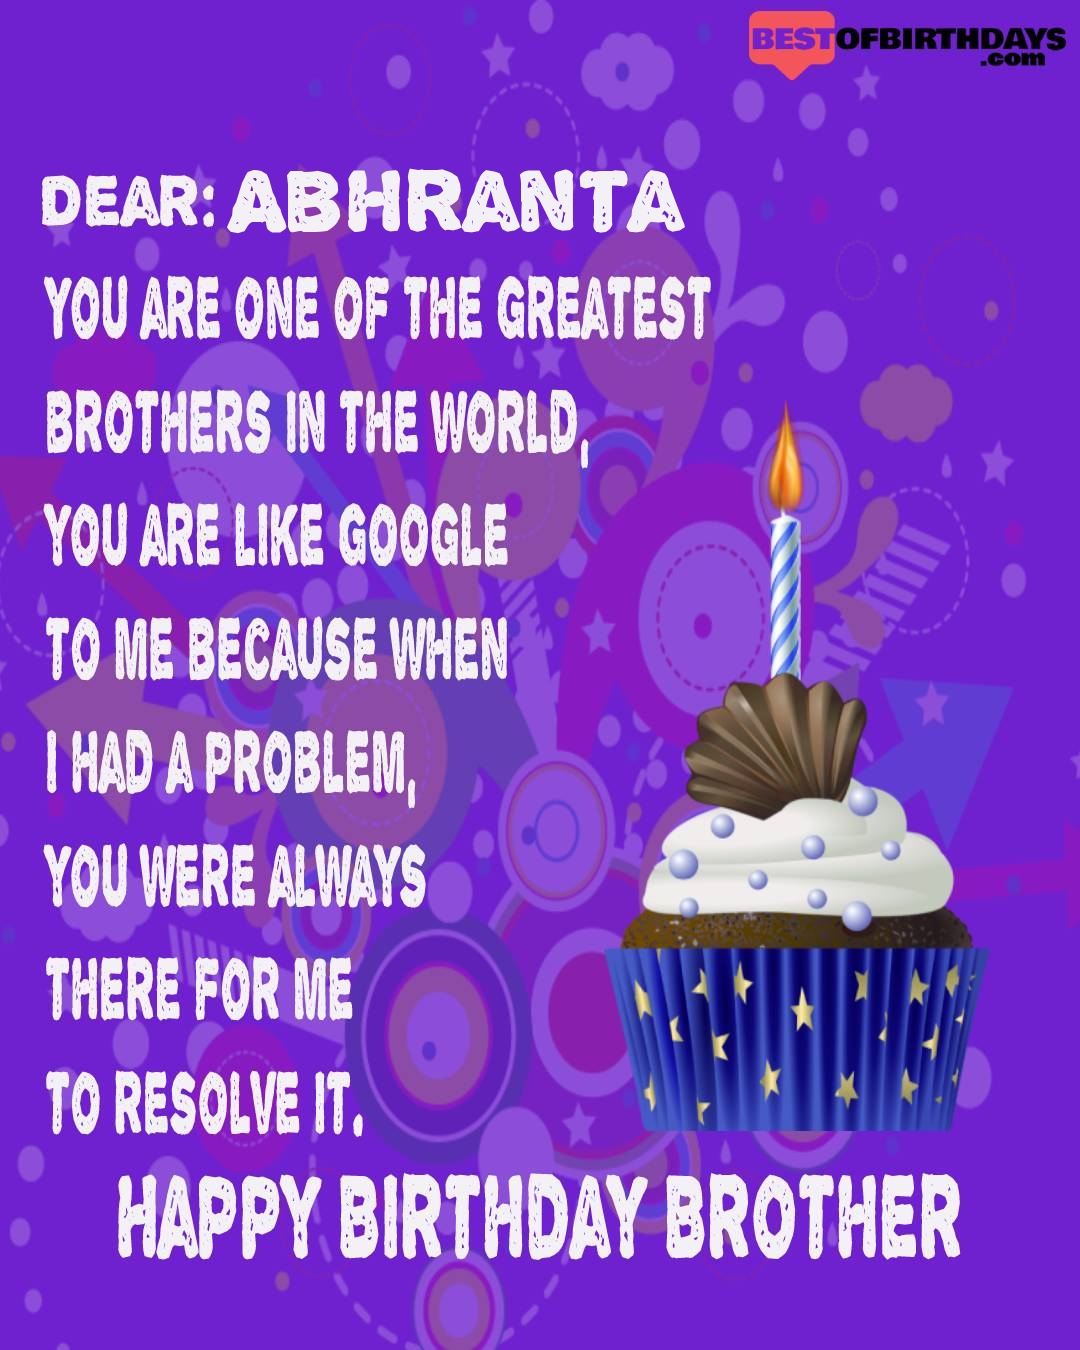 Happy birthday abhranta bhai brother bro